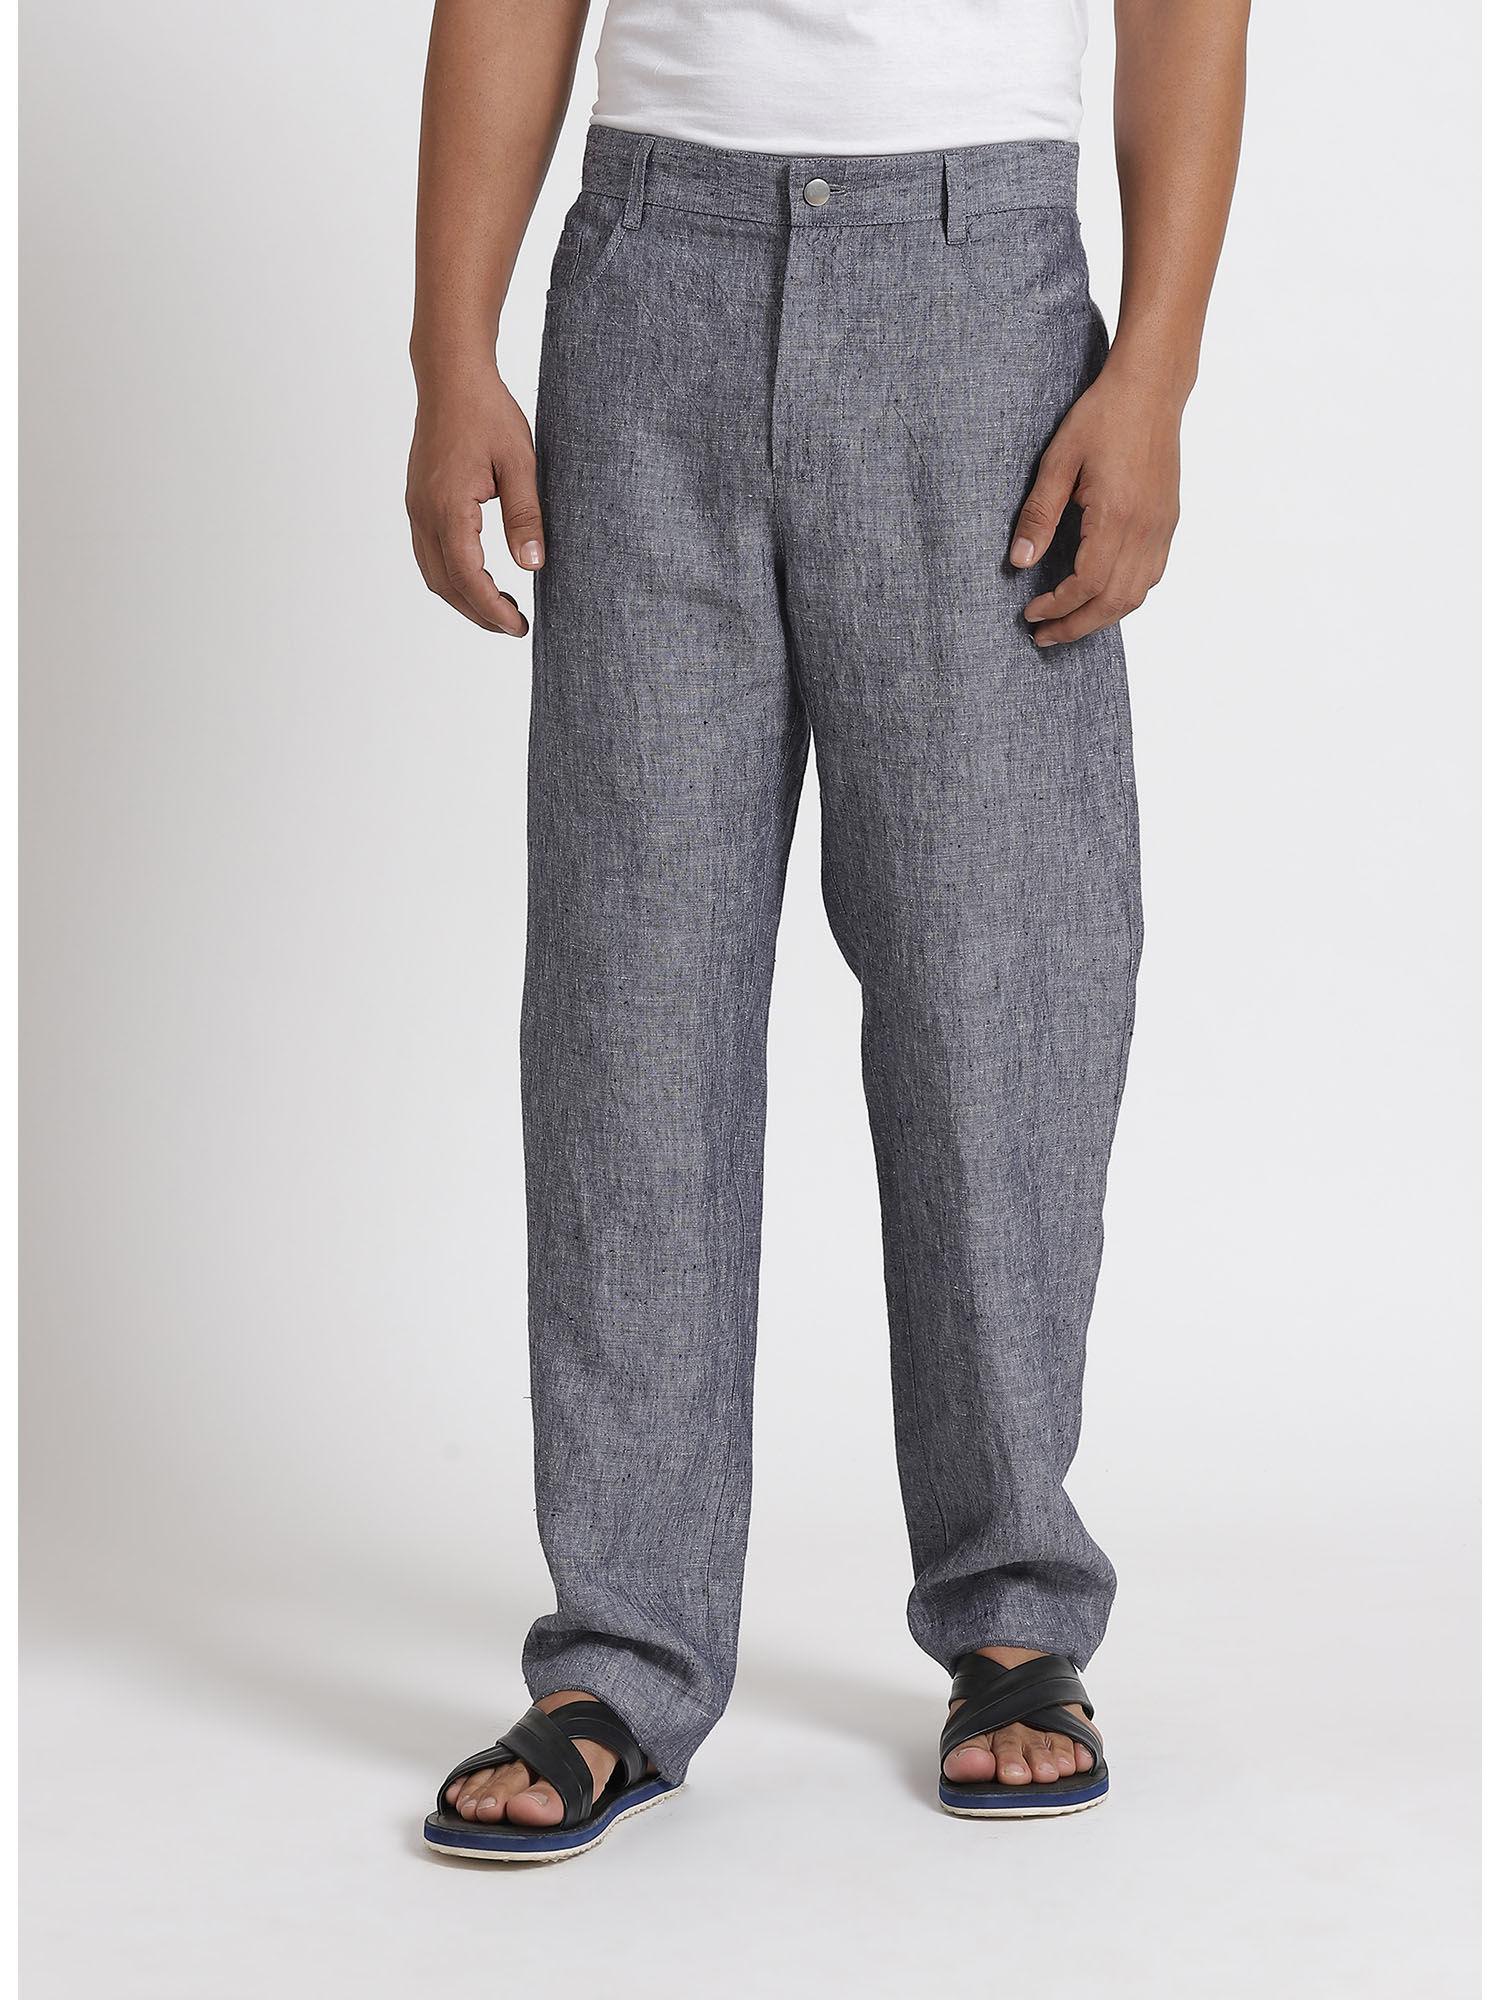 vesca grey trouser